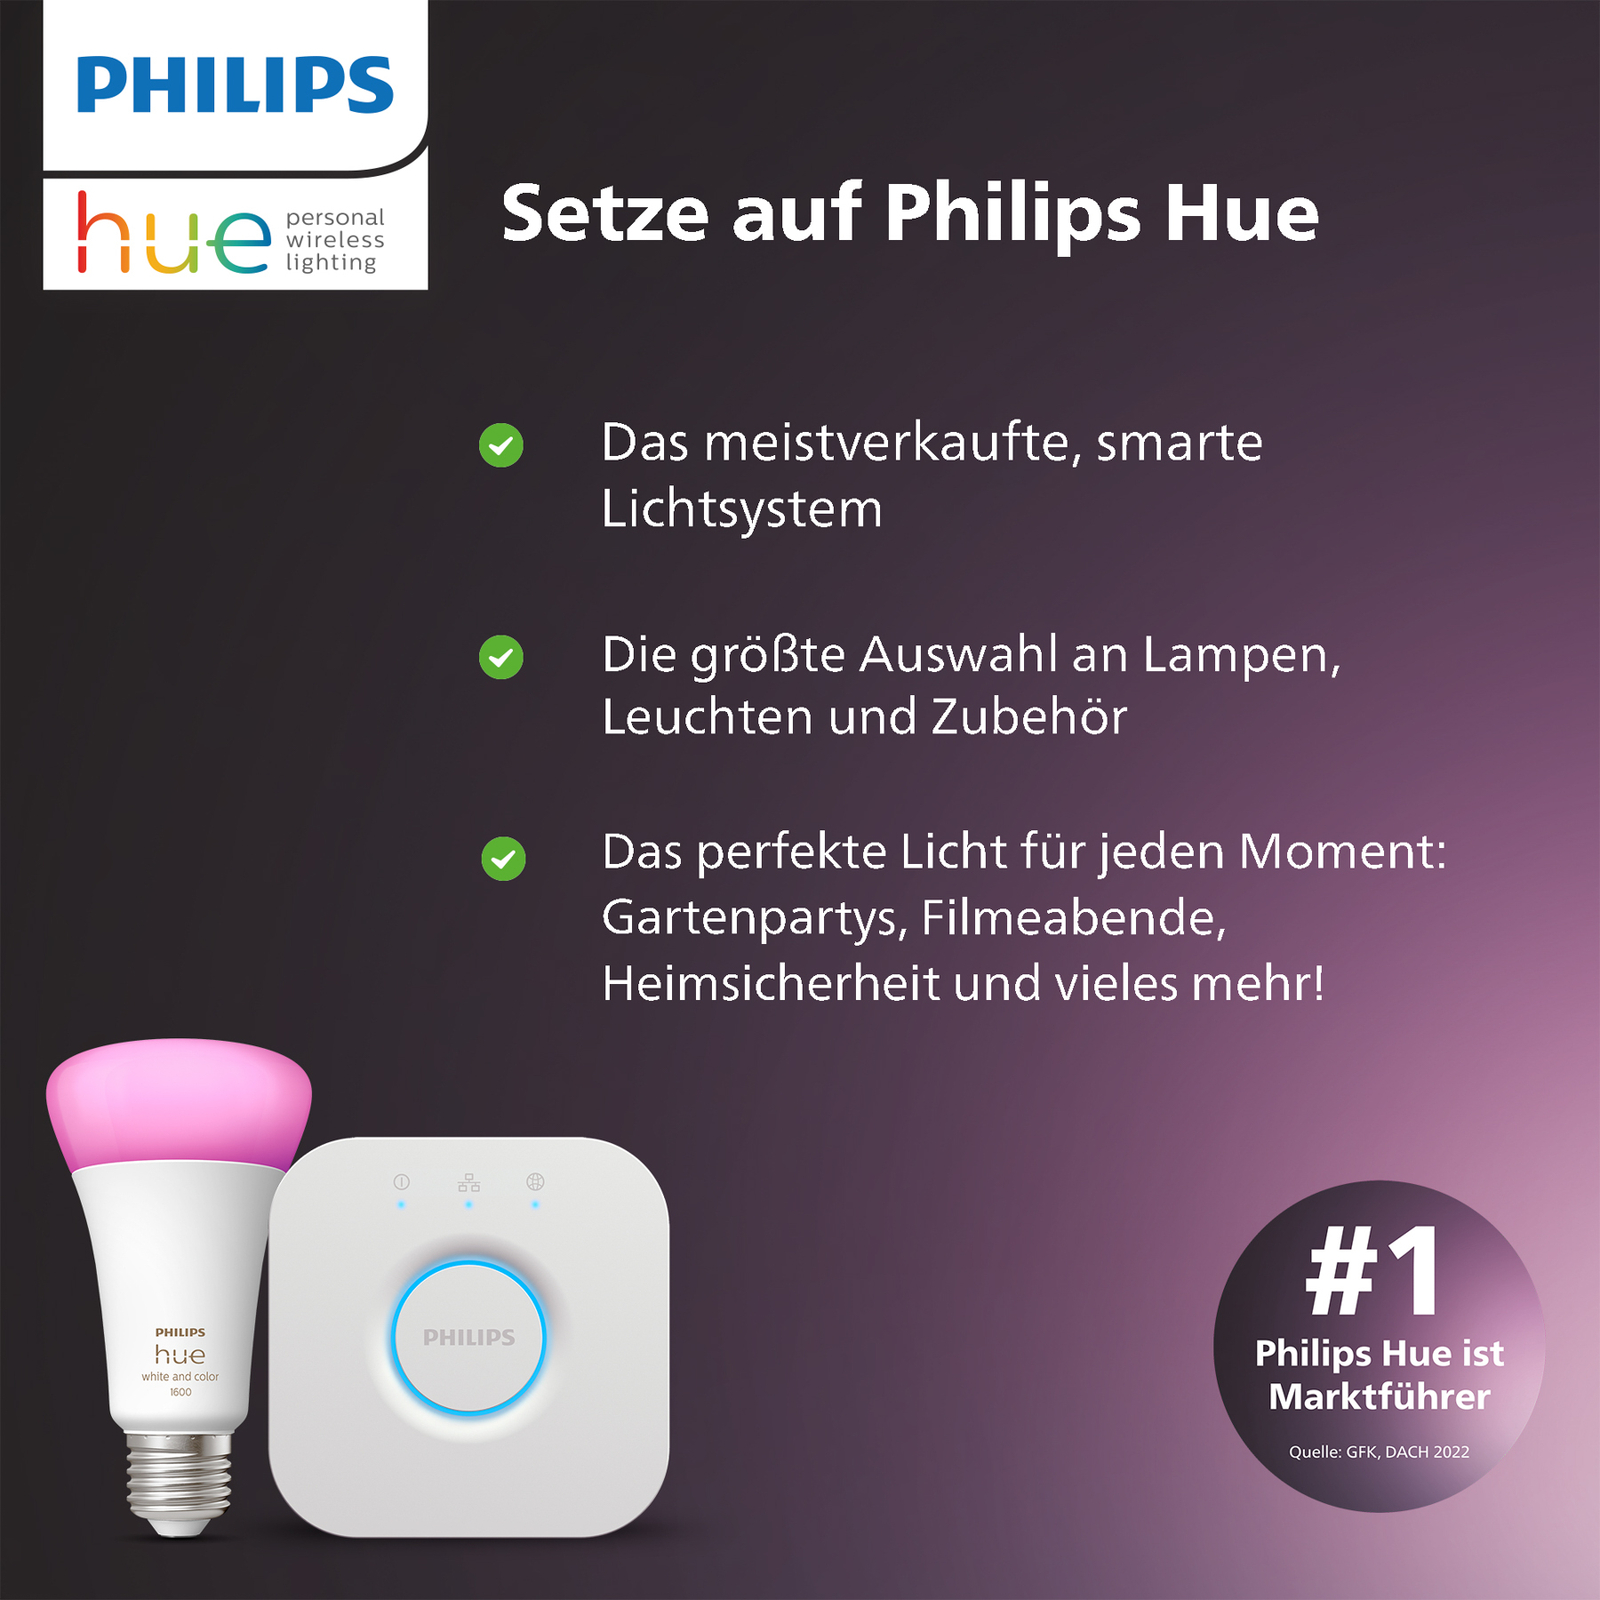 Philips Hue White Ambiance E27 LED lamp 8W 1100lm